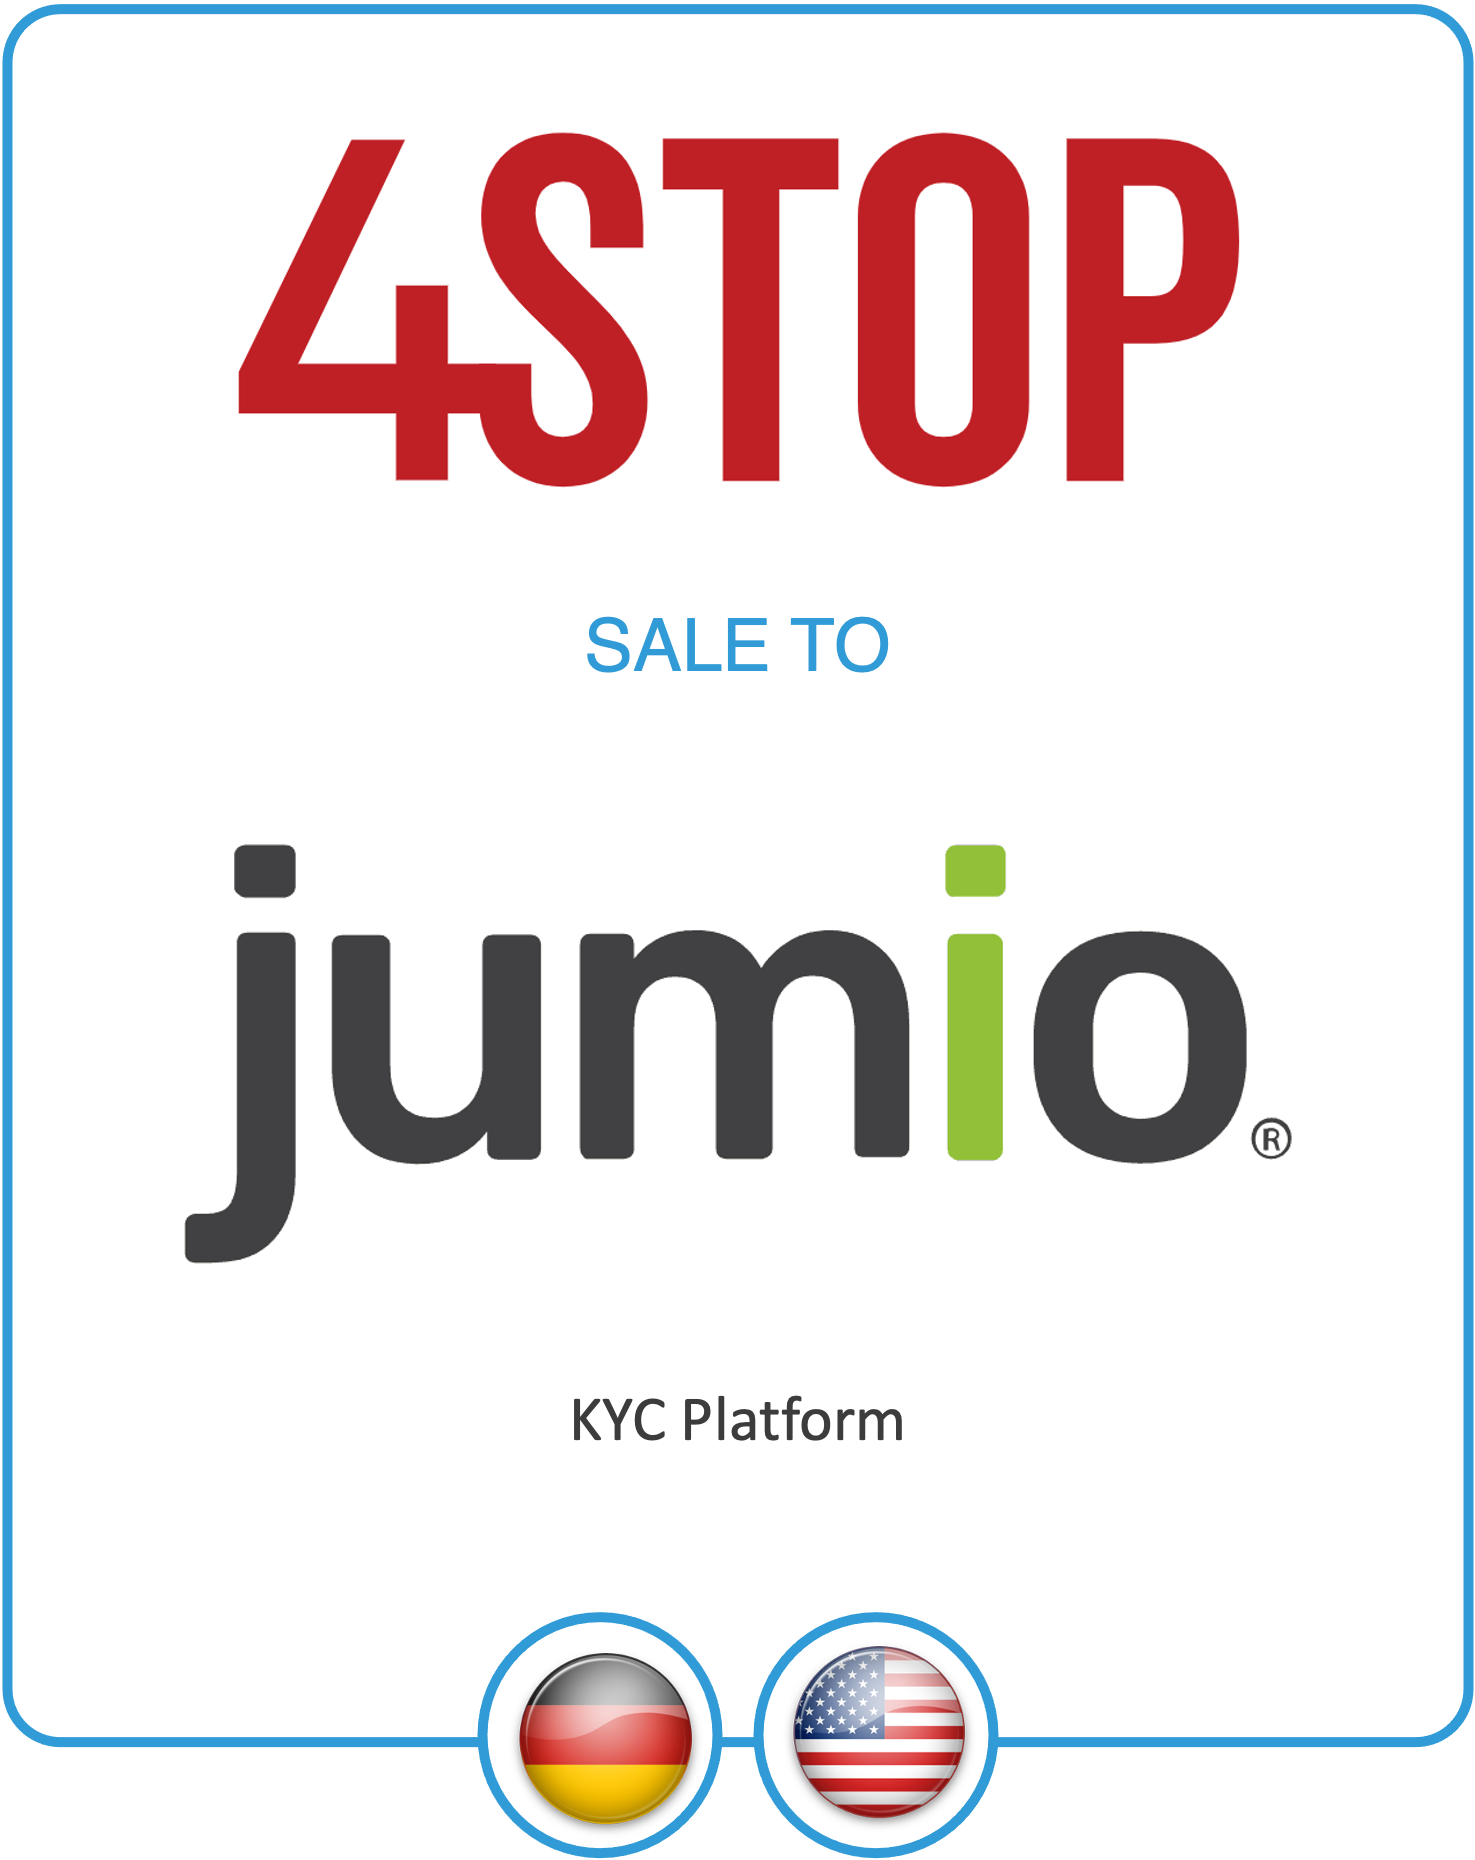 Drake Star Advises FourStop on its Sale to Jumio